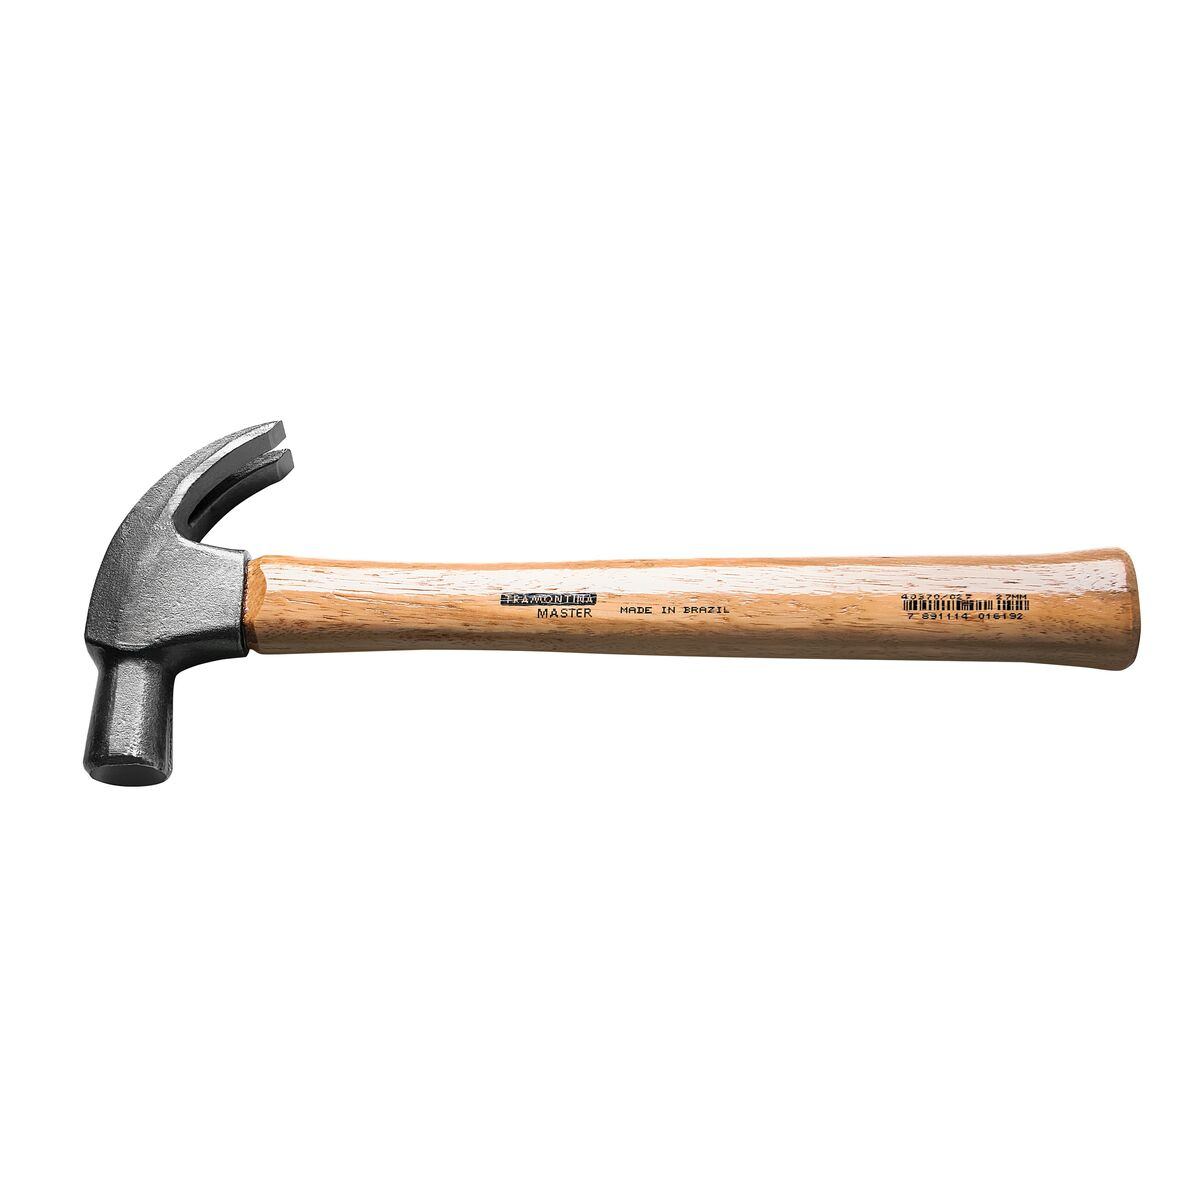 Shot blasted hardwood handle 18 mm Claw hammer